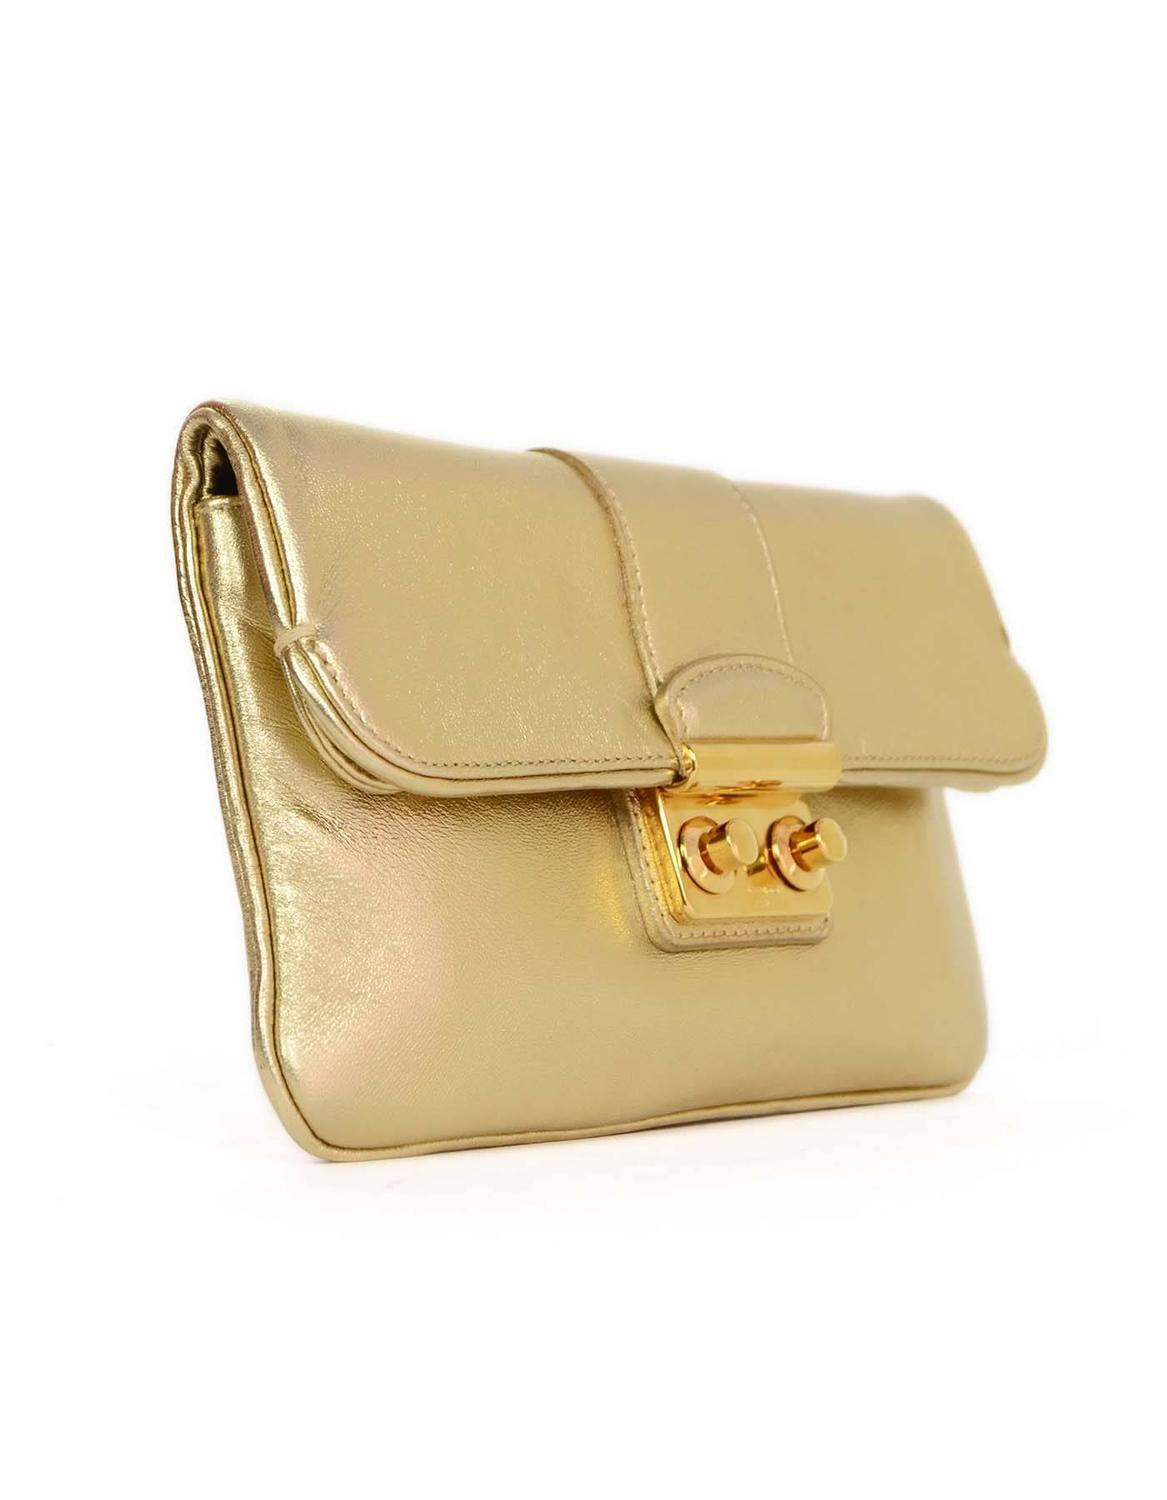 Louis Vuitton Gold Sofia Coppola SC Slim Clutch Bag rt. $1,720 at 1stdibs